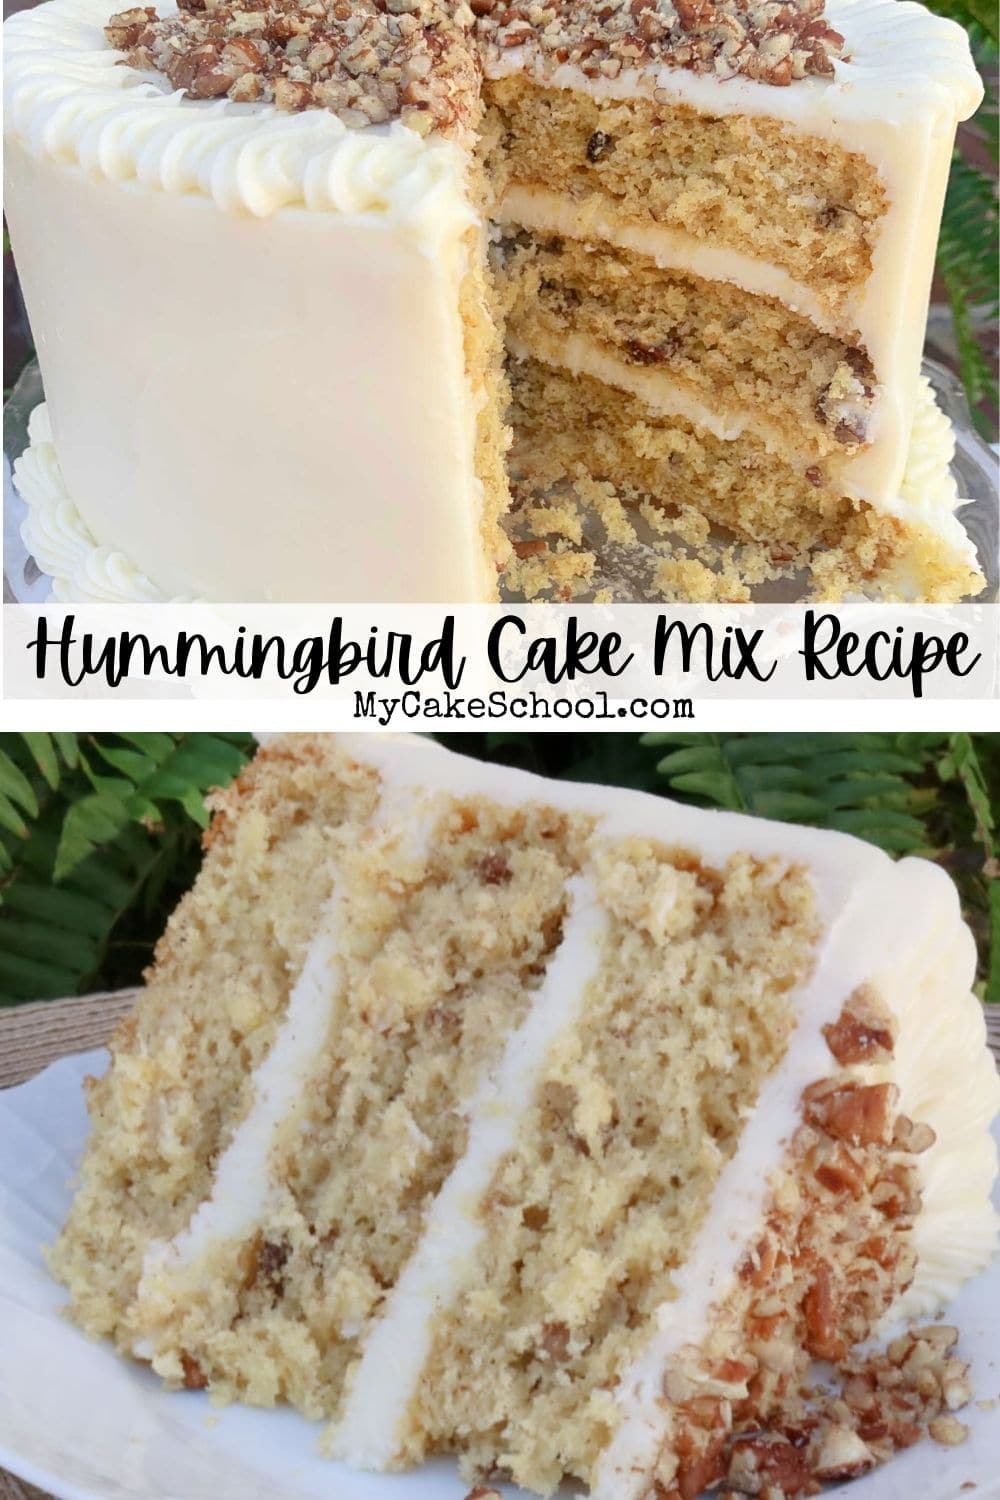 Hummingbird Cake Mix Recipe